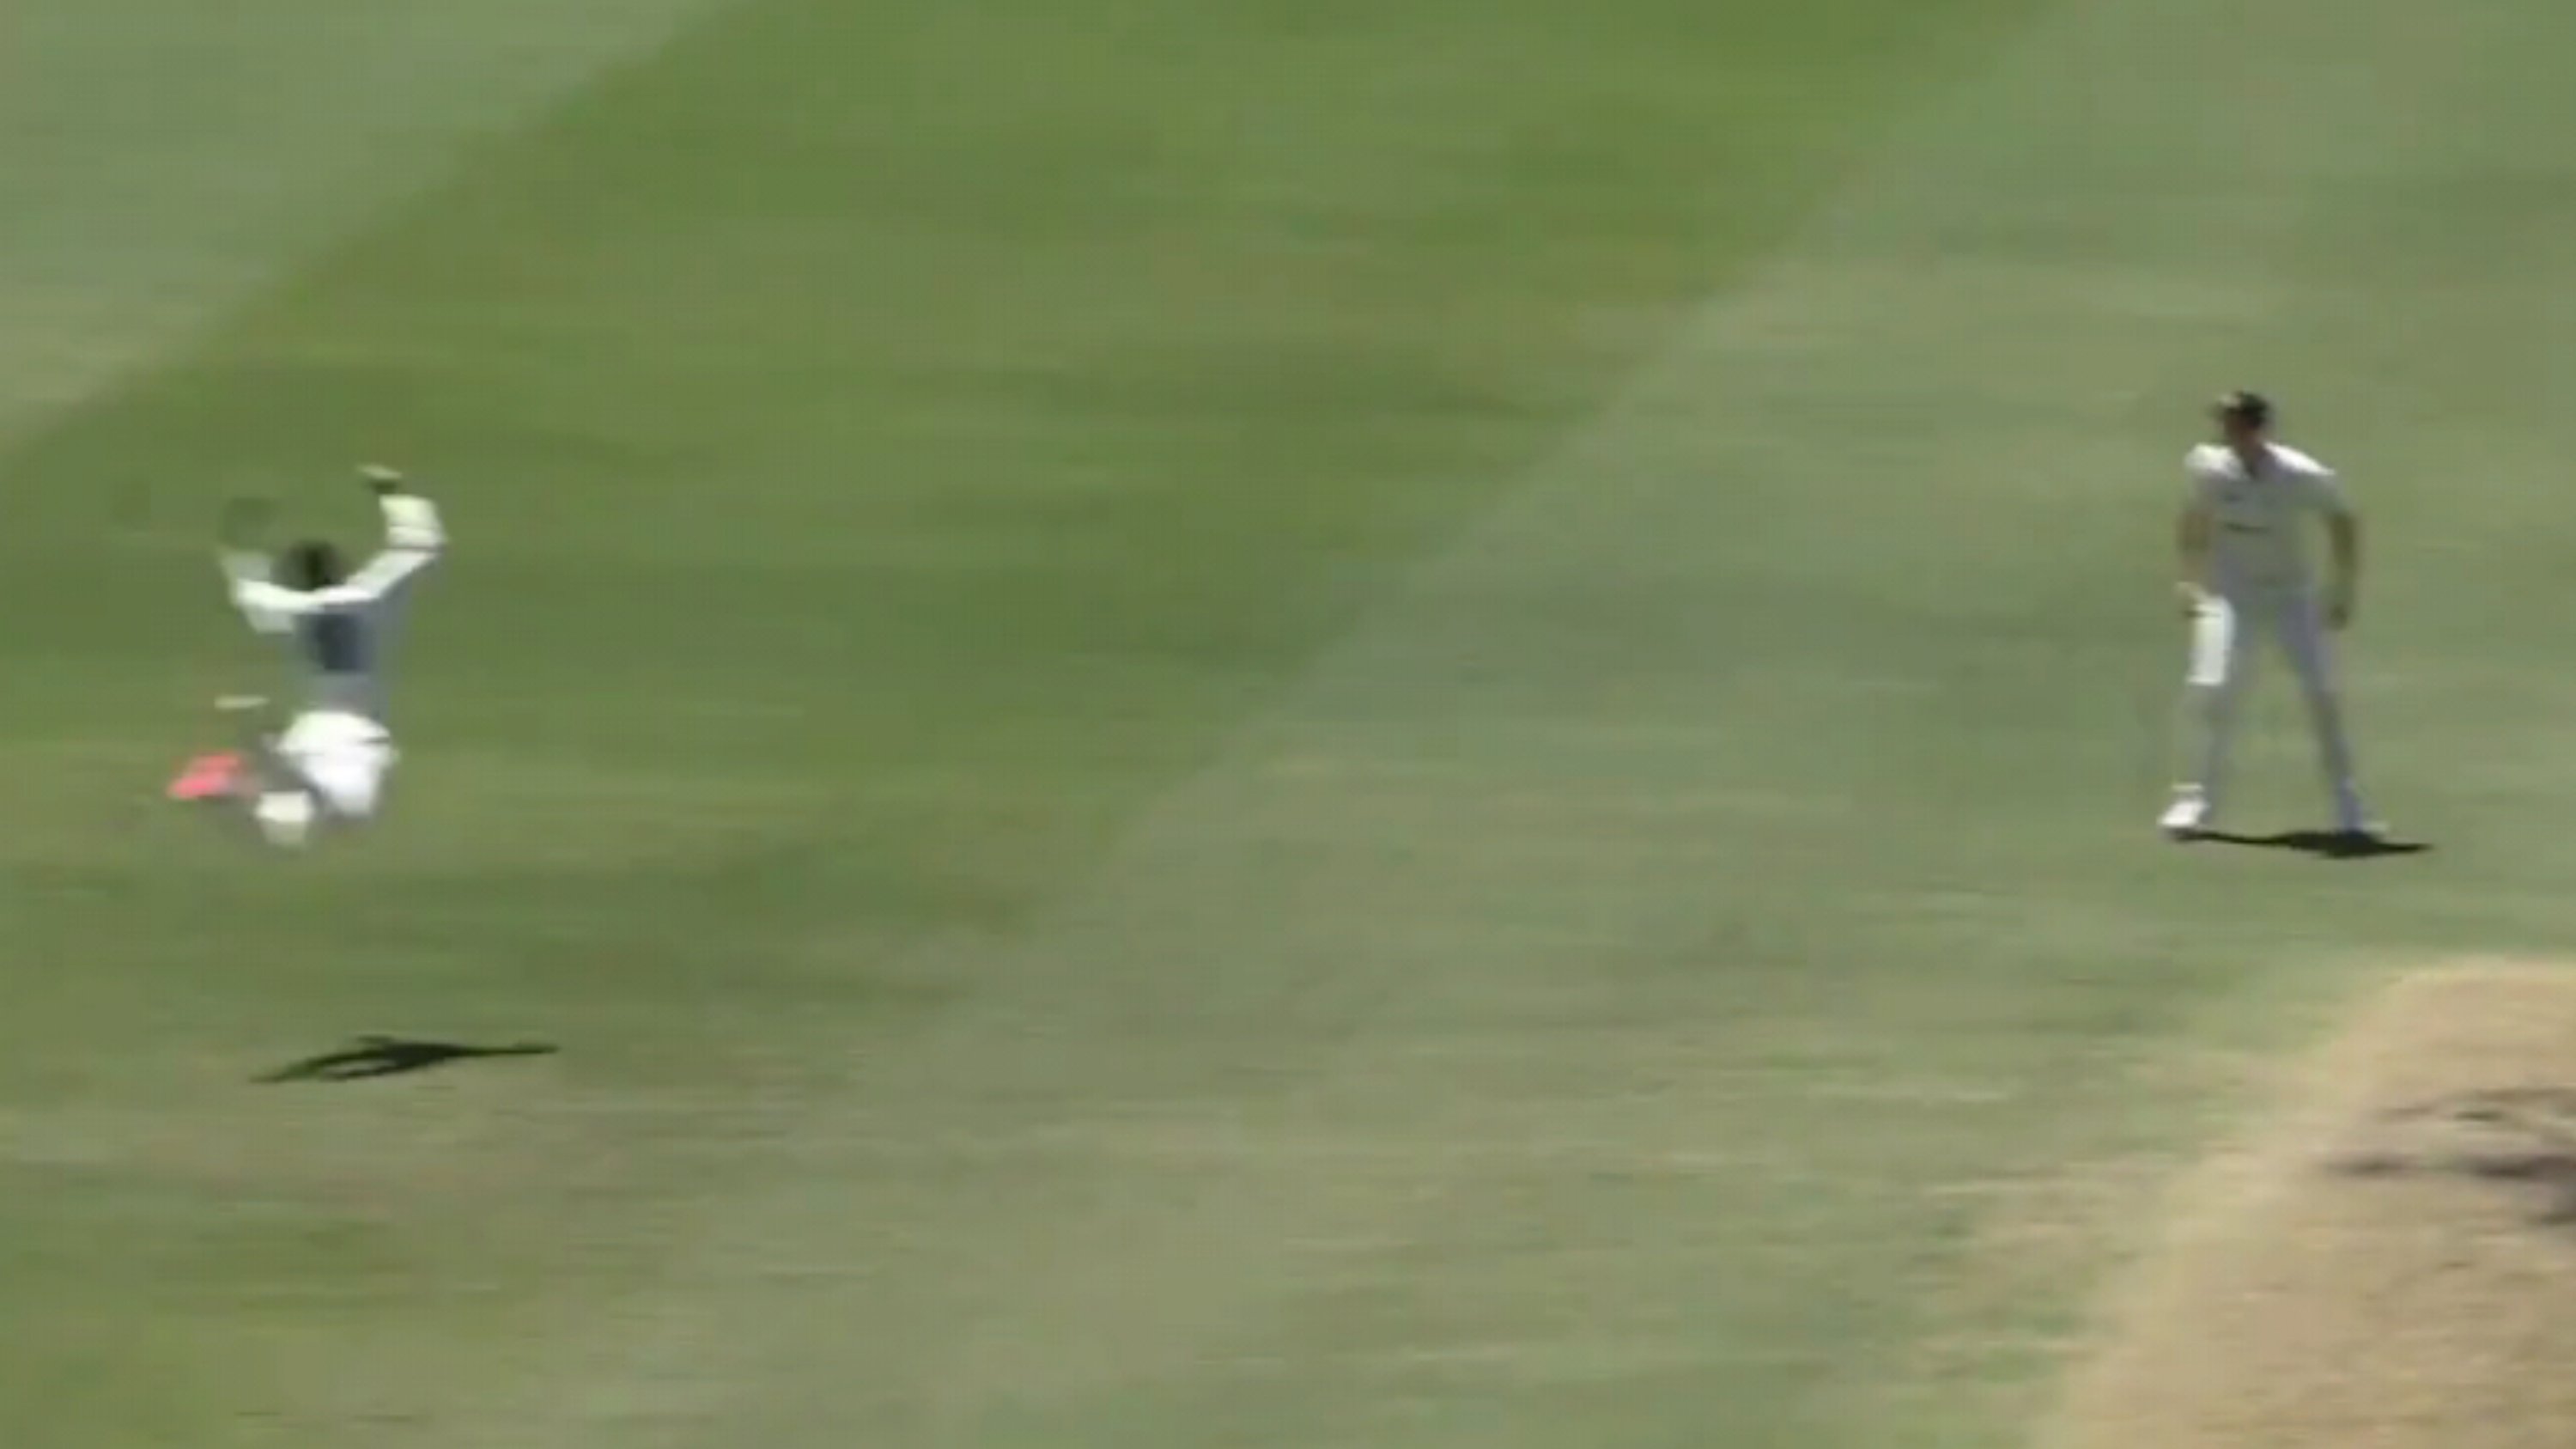 Ashton  Agar takes a marvelous catch in Australia's domestic league